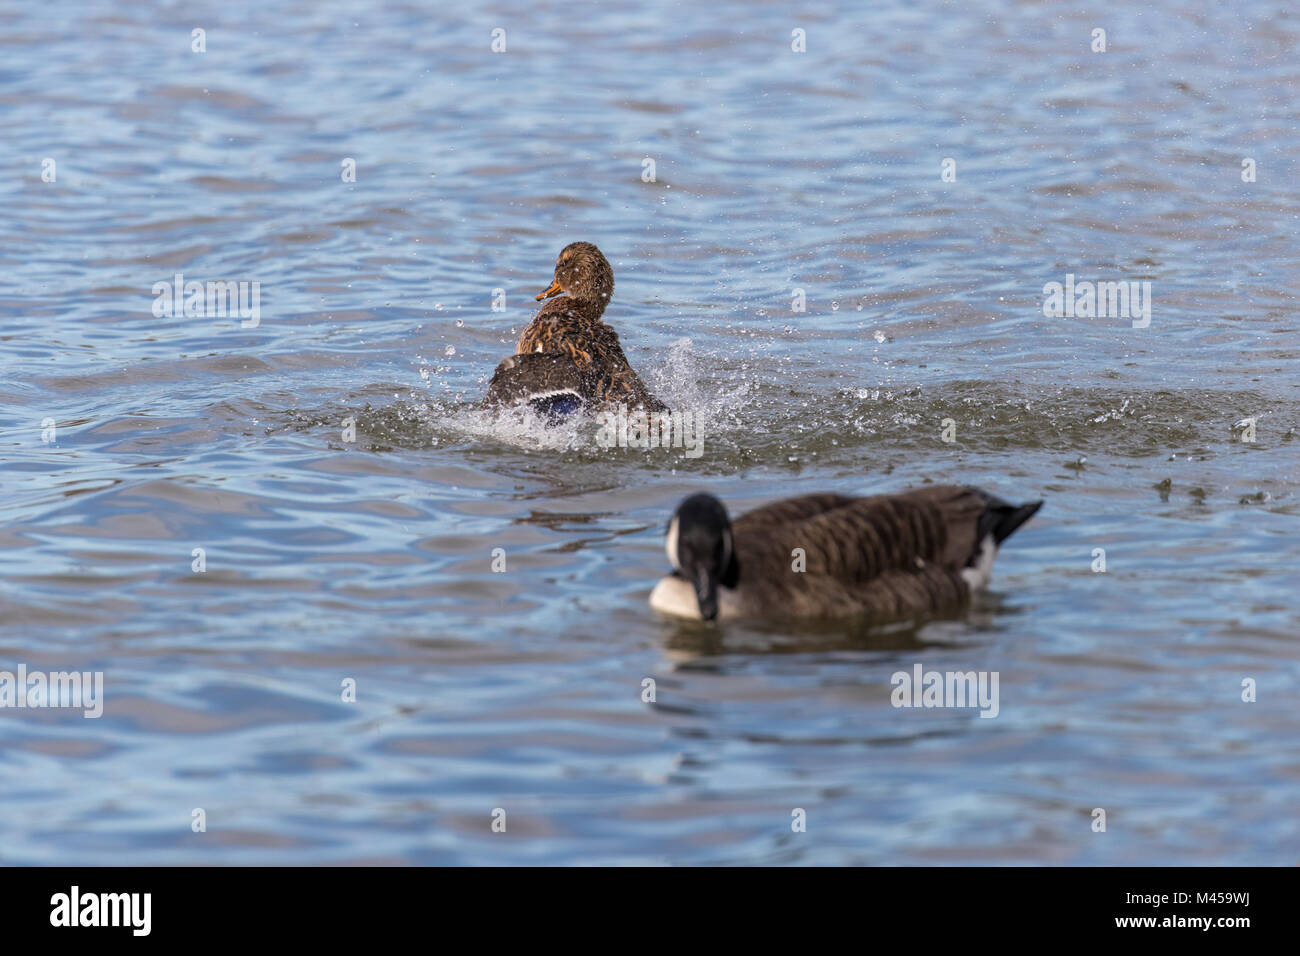 Female mallard (Anas platyrhynchos) splashing in water avec Canadian goose en premier plan. Banque D'Images